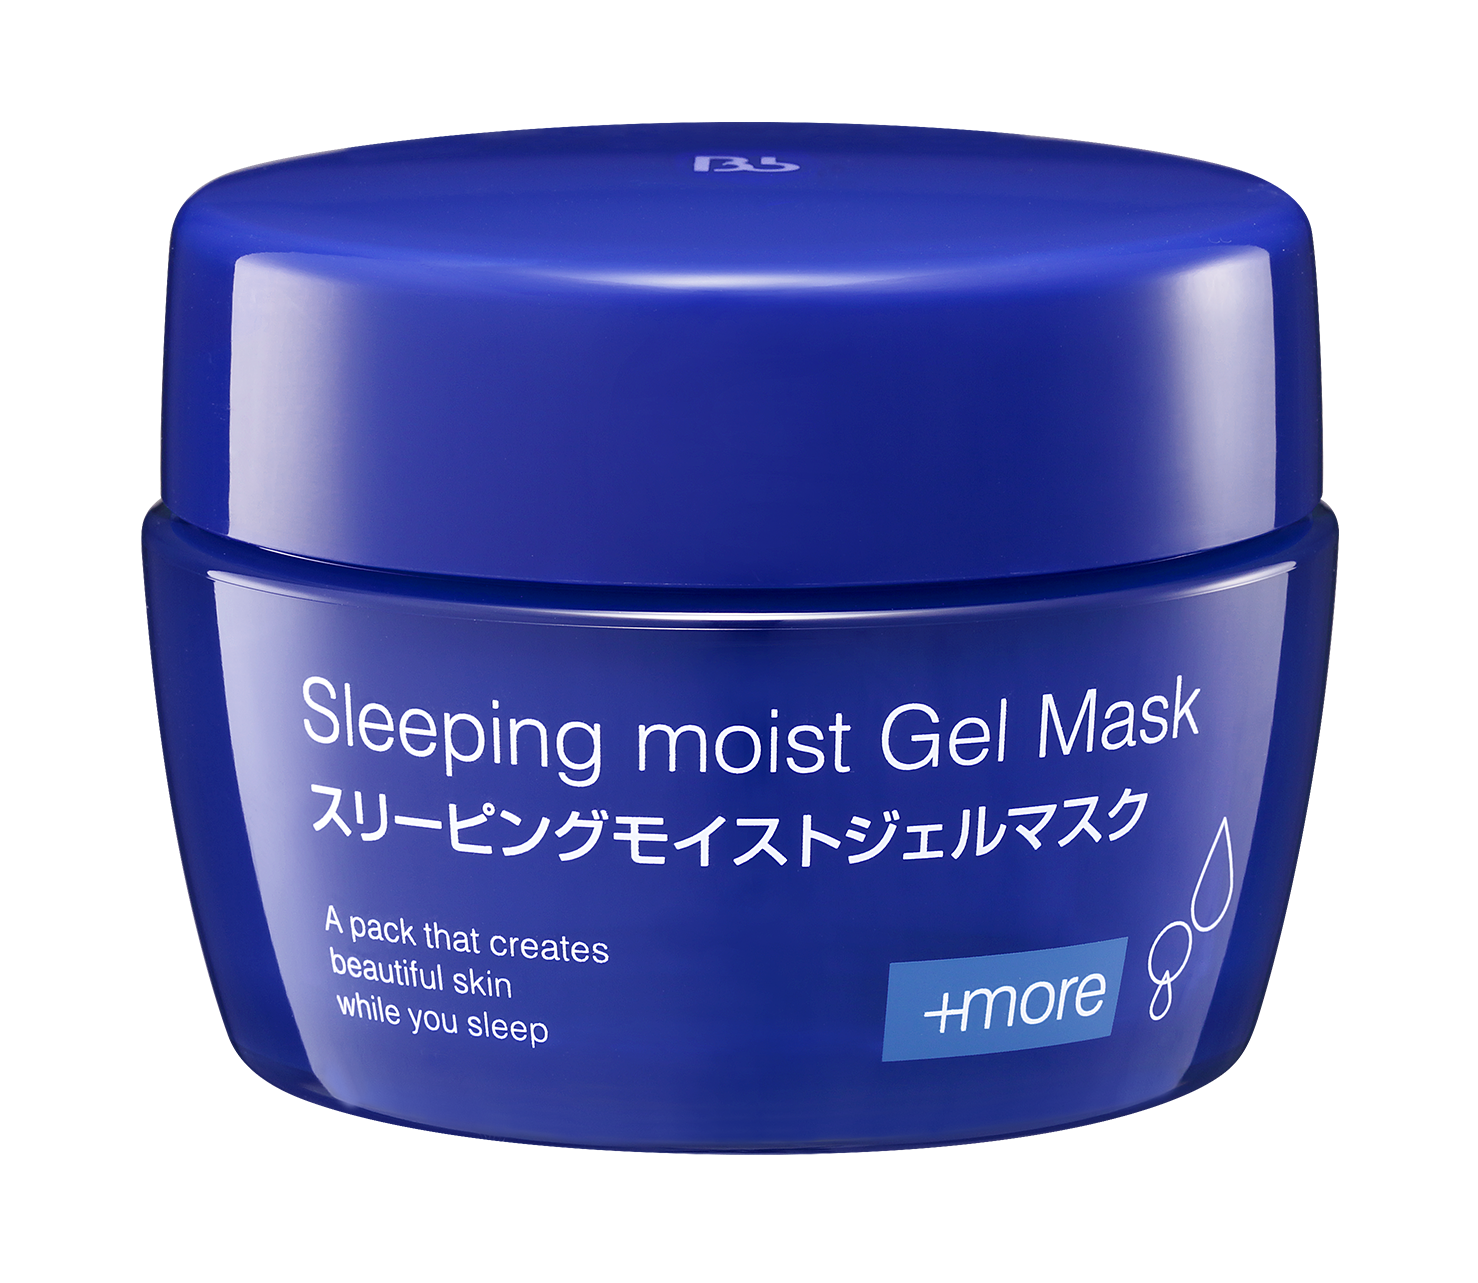 Ночная маска biodance. Sleeping moist Gel Mask Япония. Маска гель ночная. BB Laboratories маска. Гель ночной для лица.